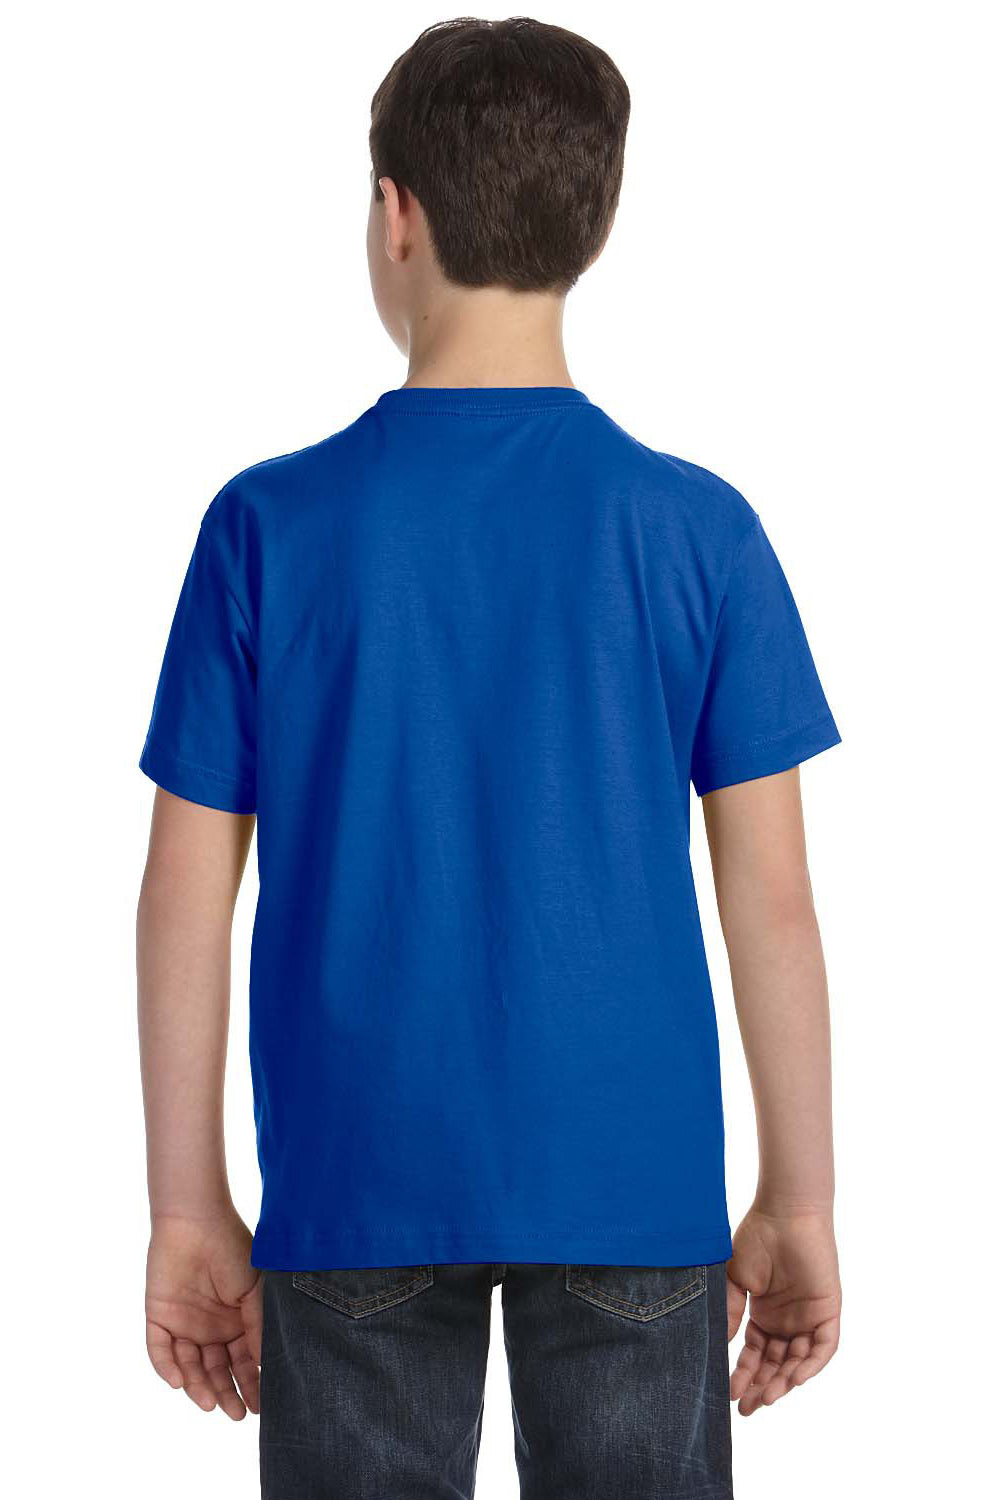 LAT 6101 Youth Fine Jersey Short Sleeve Crewneck T-Shirt Royal Blue Back